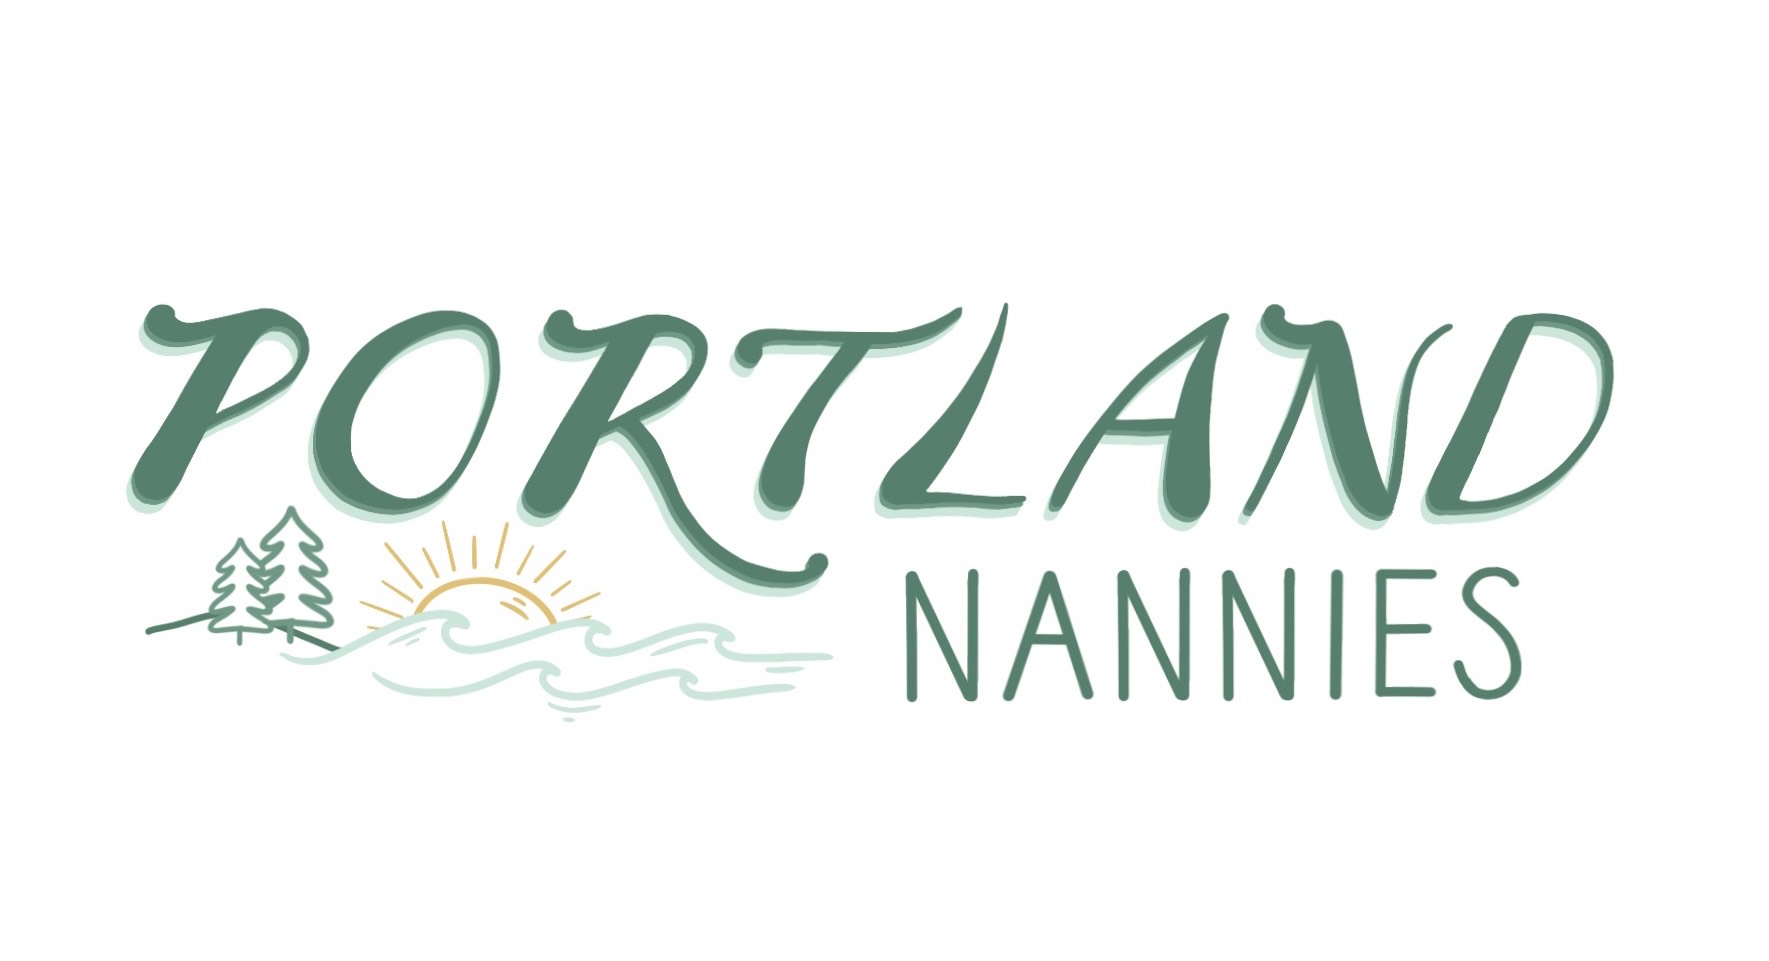 Portland Nannies Families!